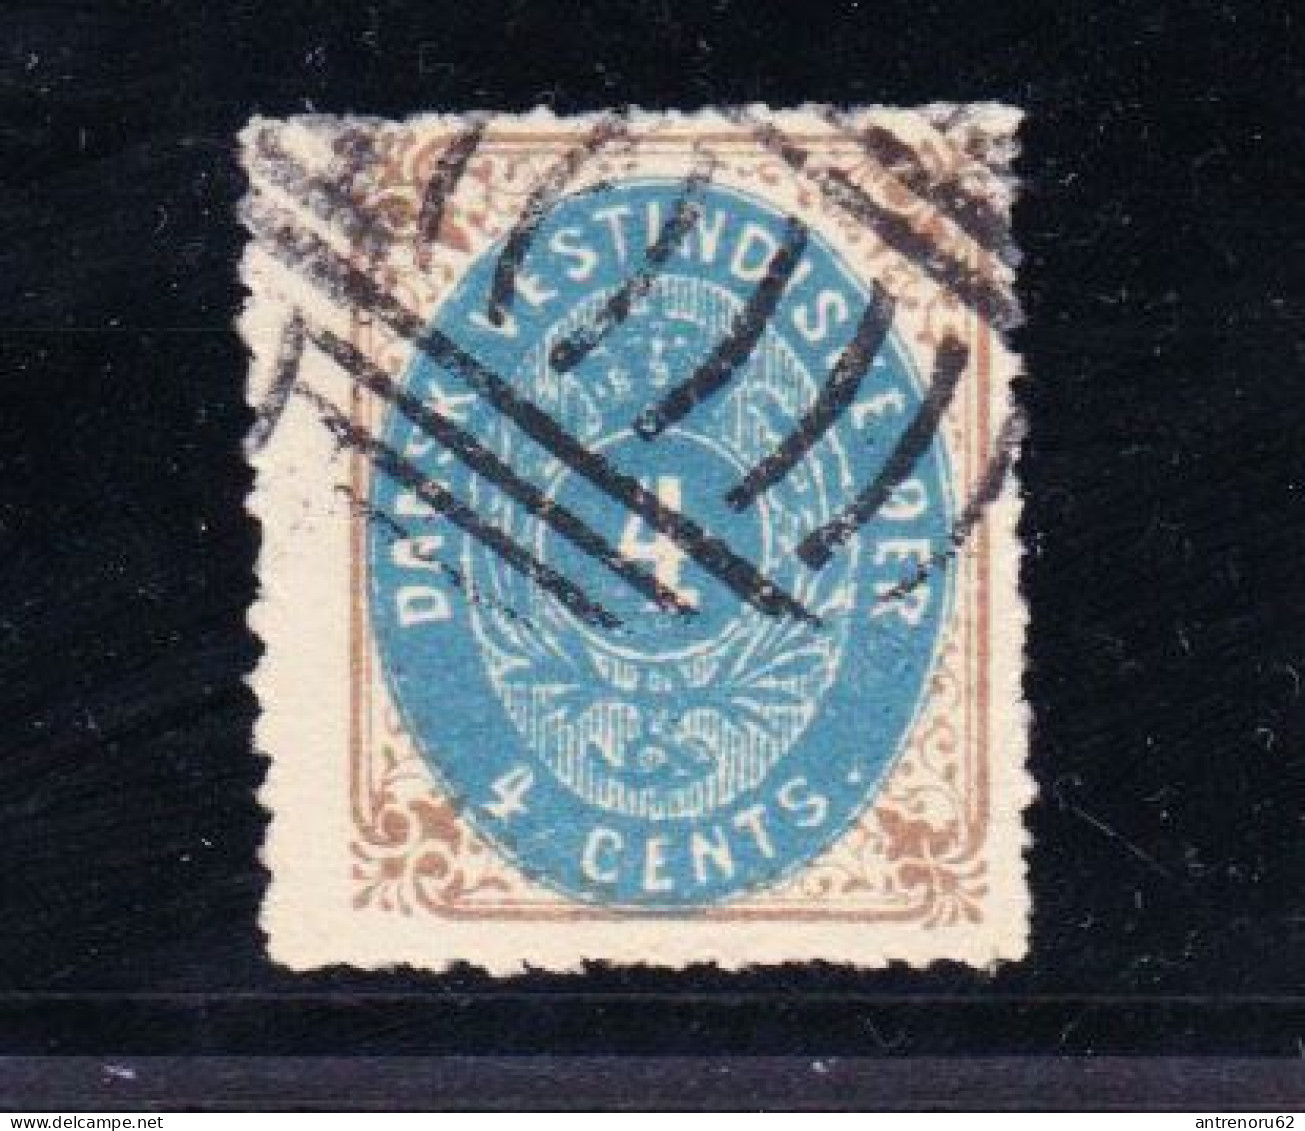 STAMPS-DENMARK-WEST-INDIES-1873-USED-SEE-SCAN - Denmark (West Indies)